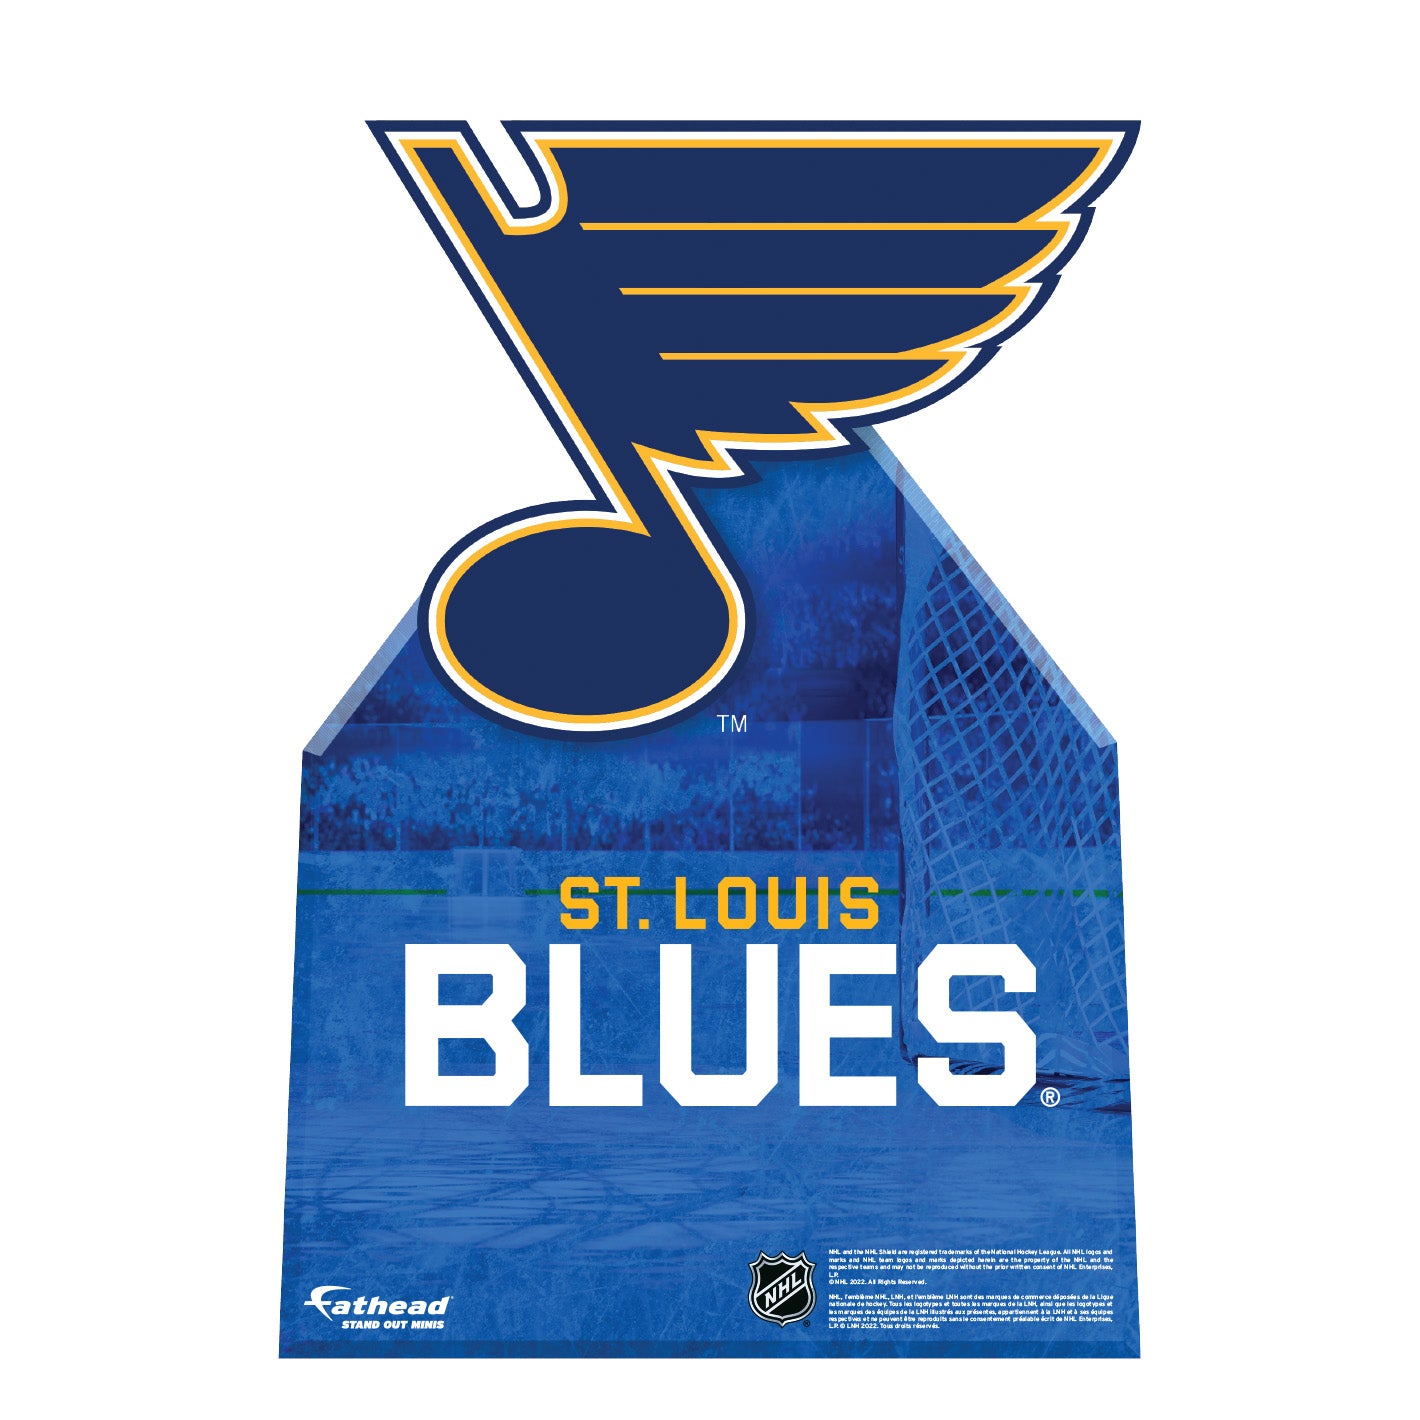 St. Louis Blues: 2022 Logo Foam Core Cutout - Officially Licensed